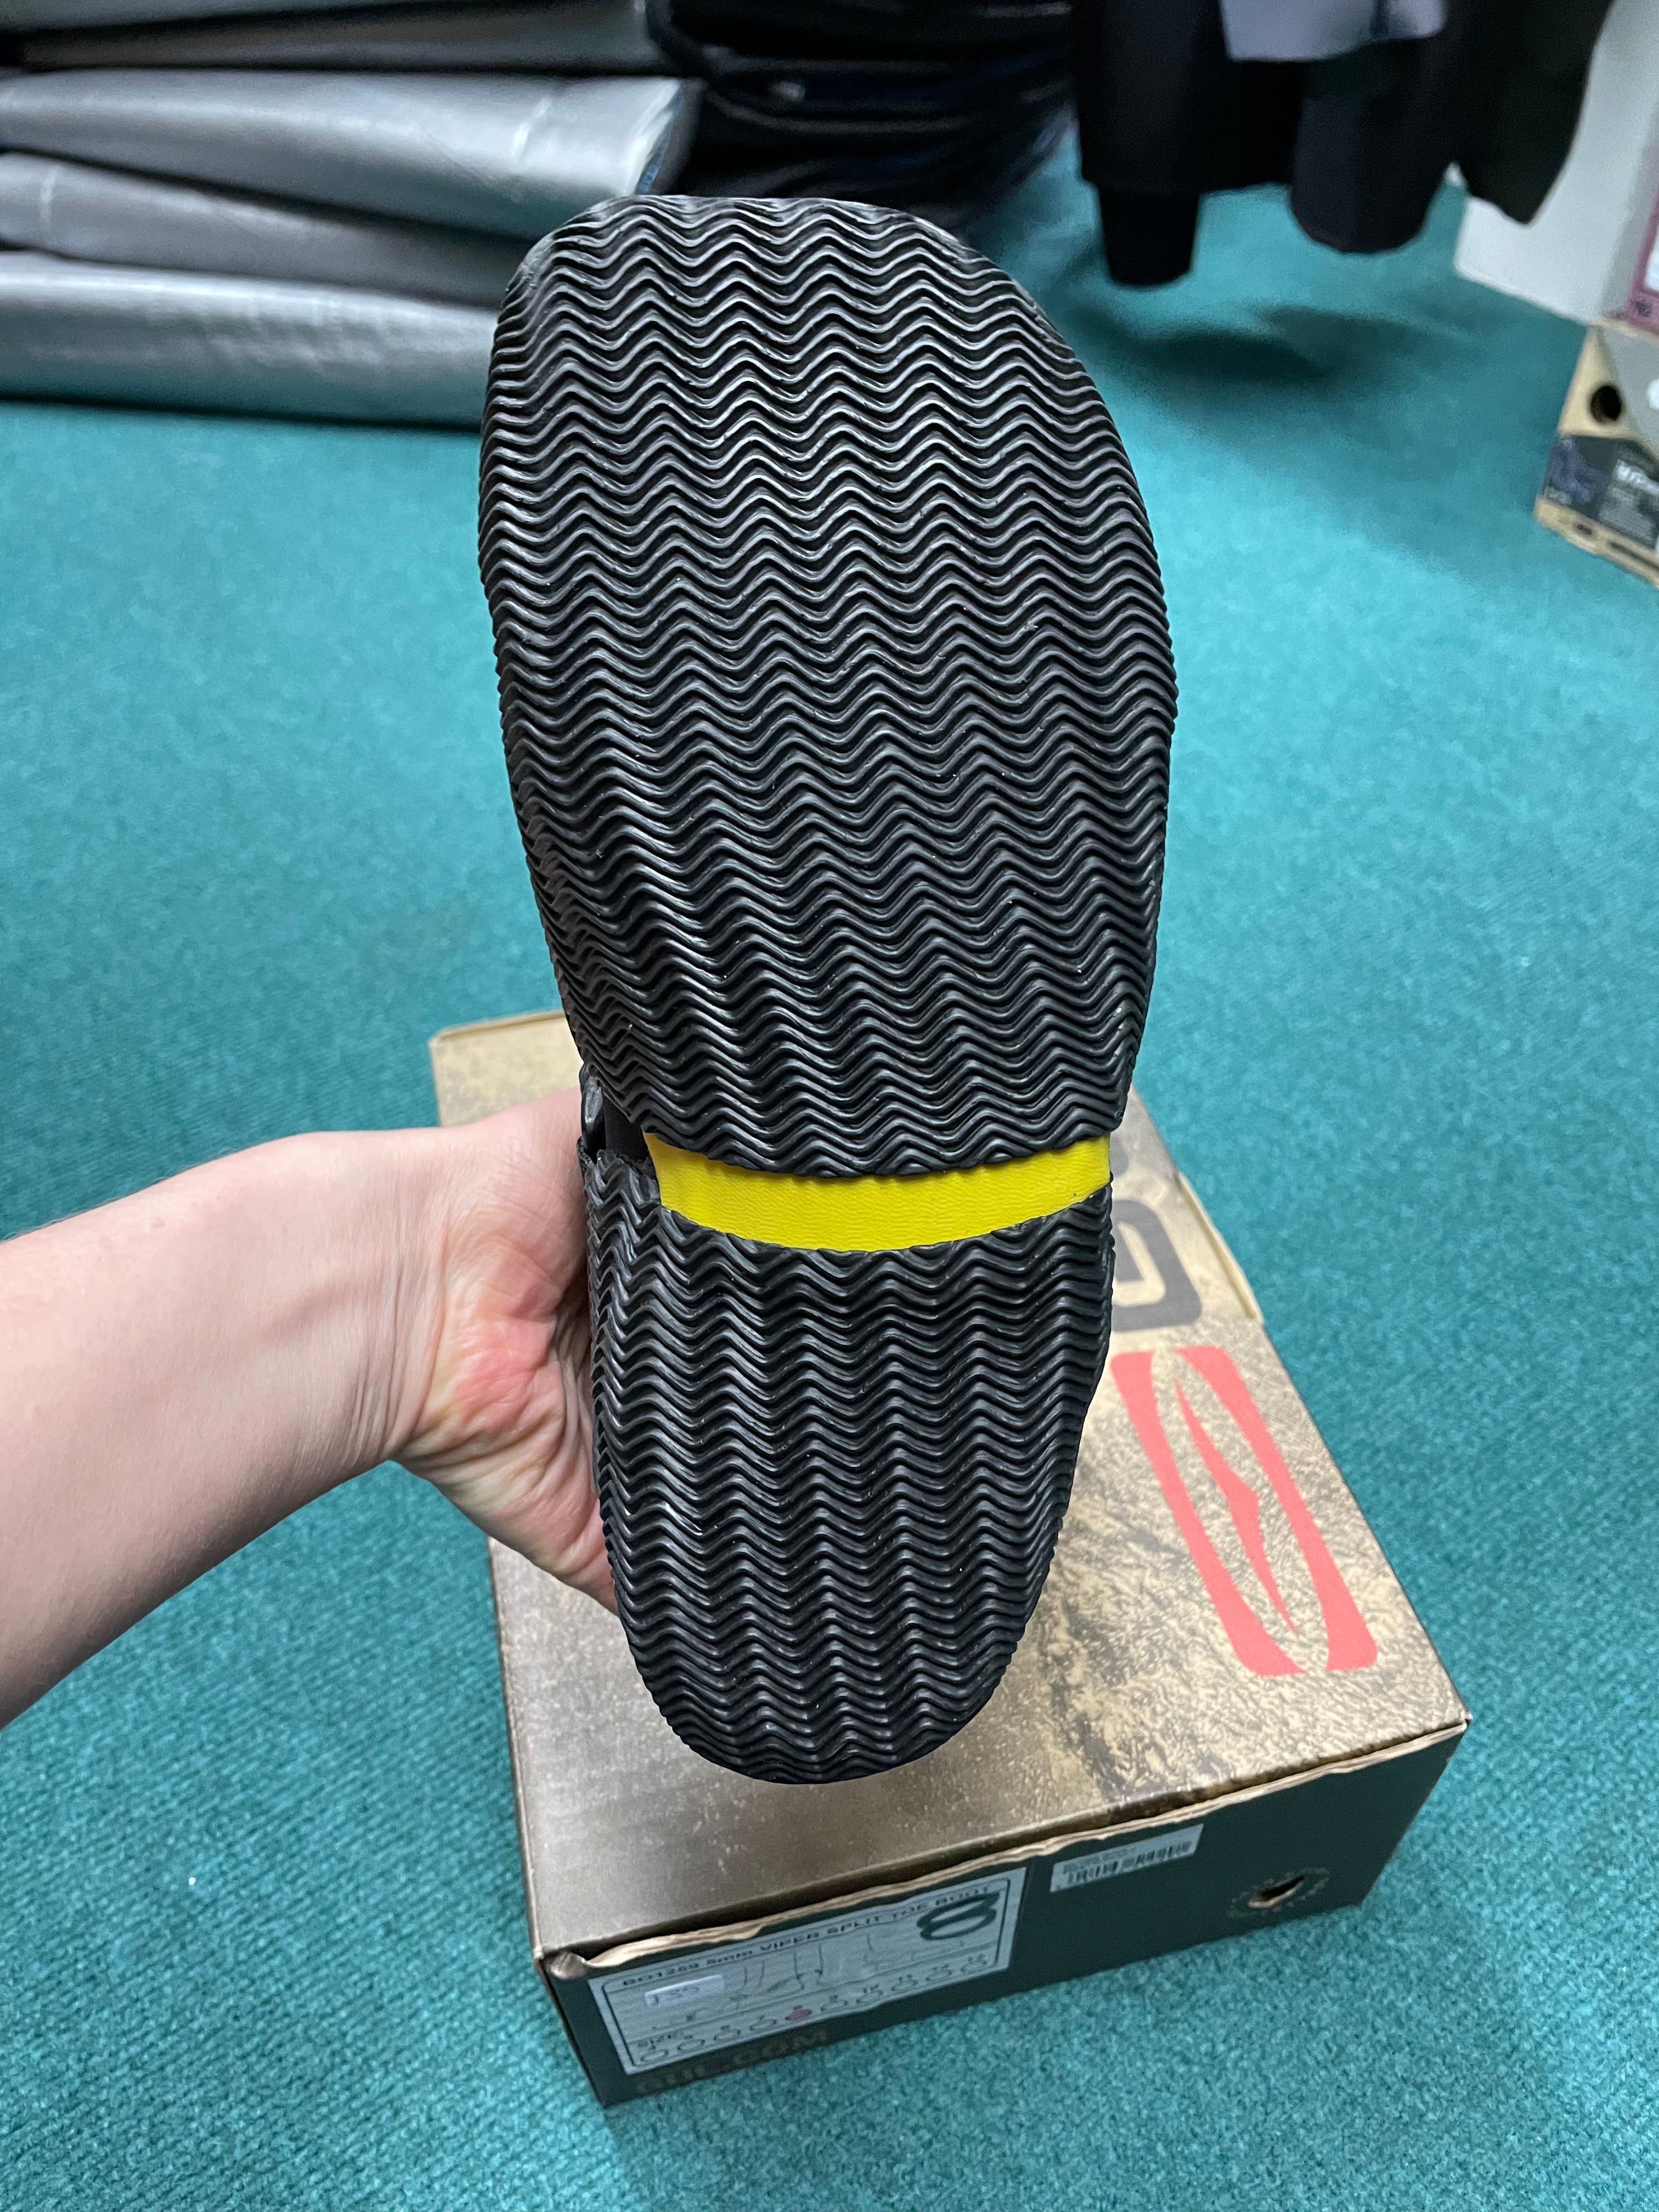 Gul Viper Split Toe Boots - 5mm Wetsuit Boots